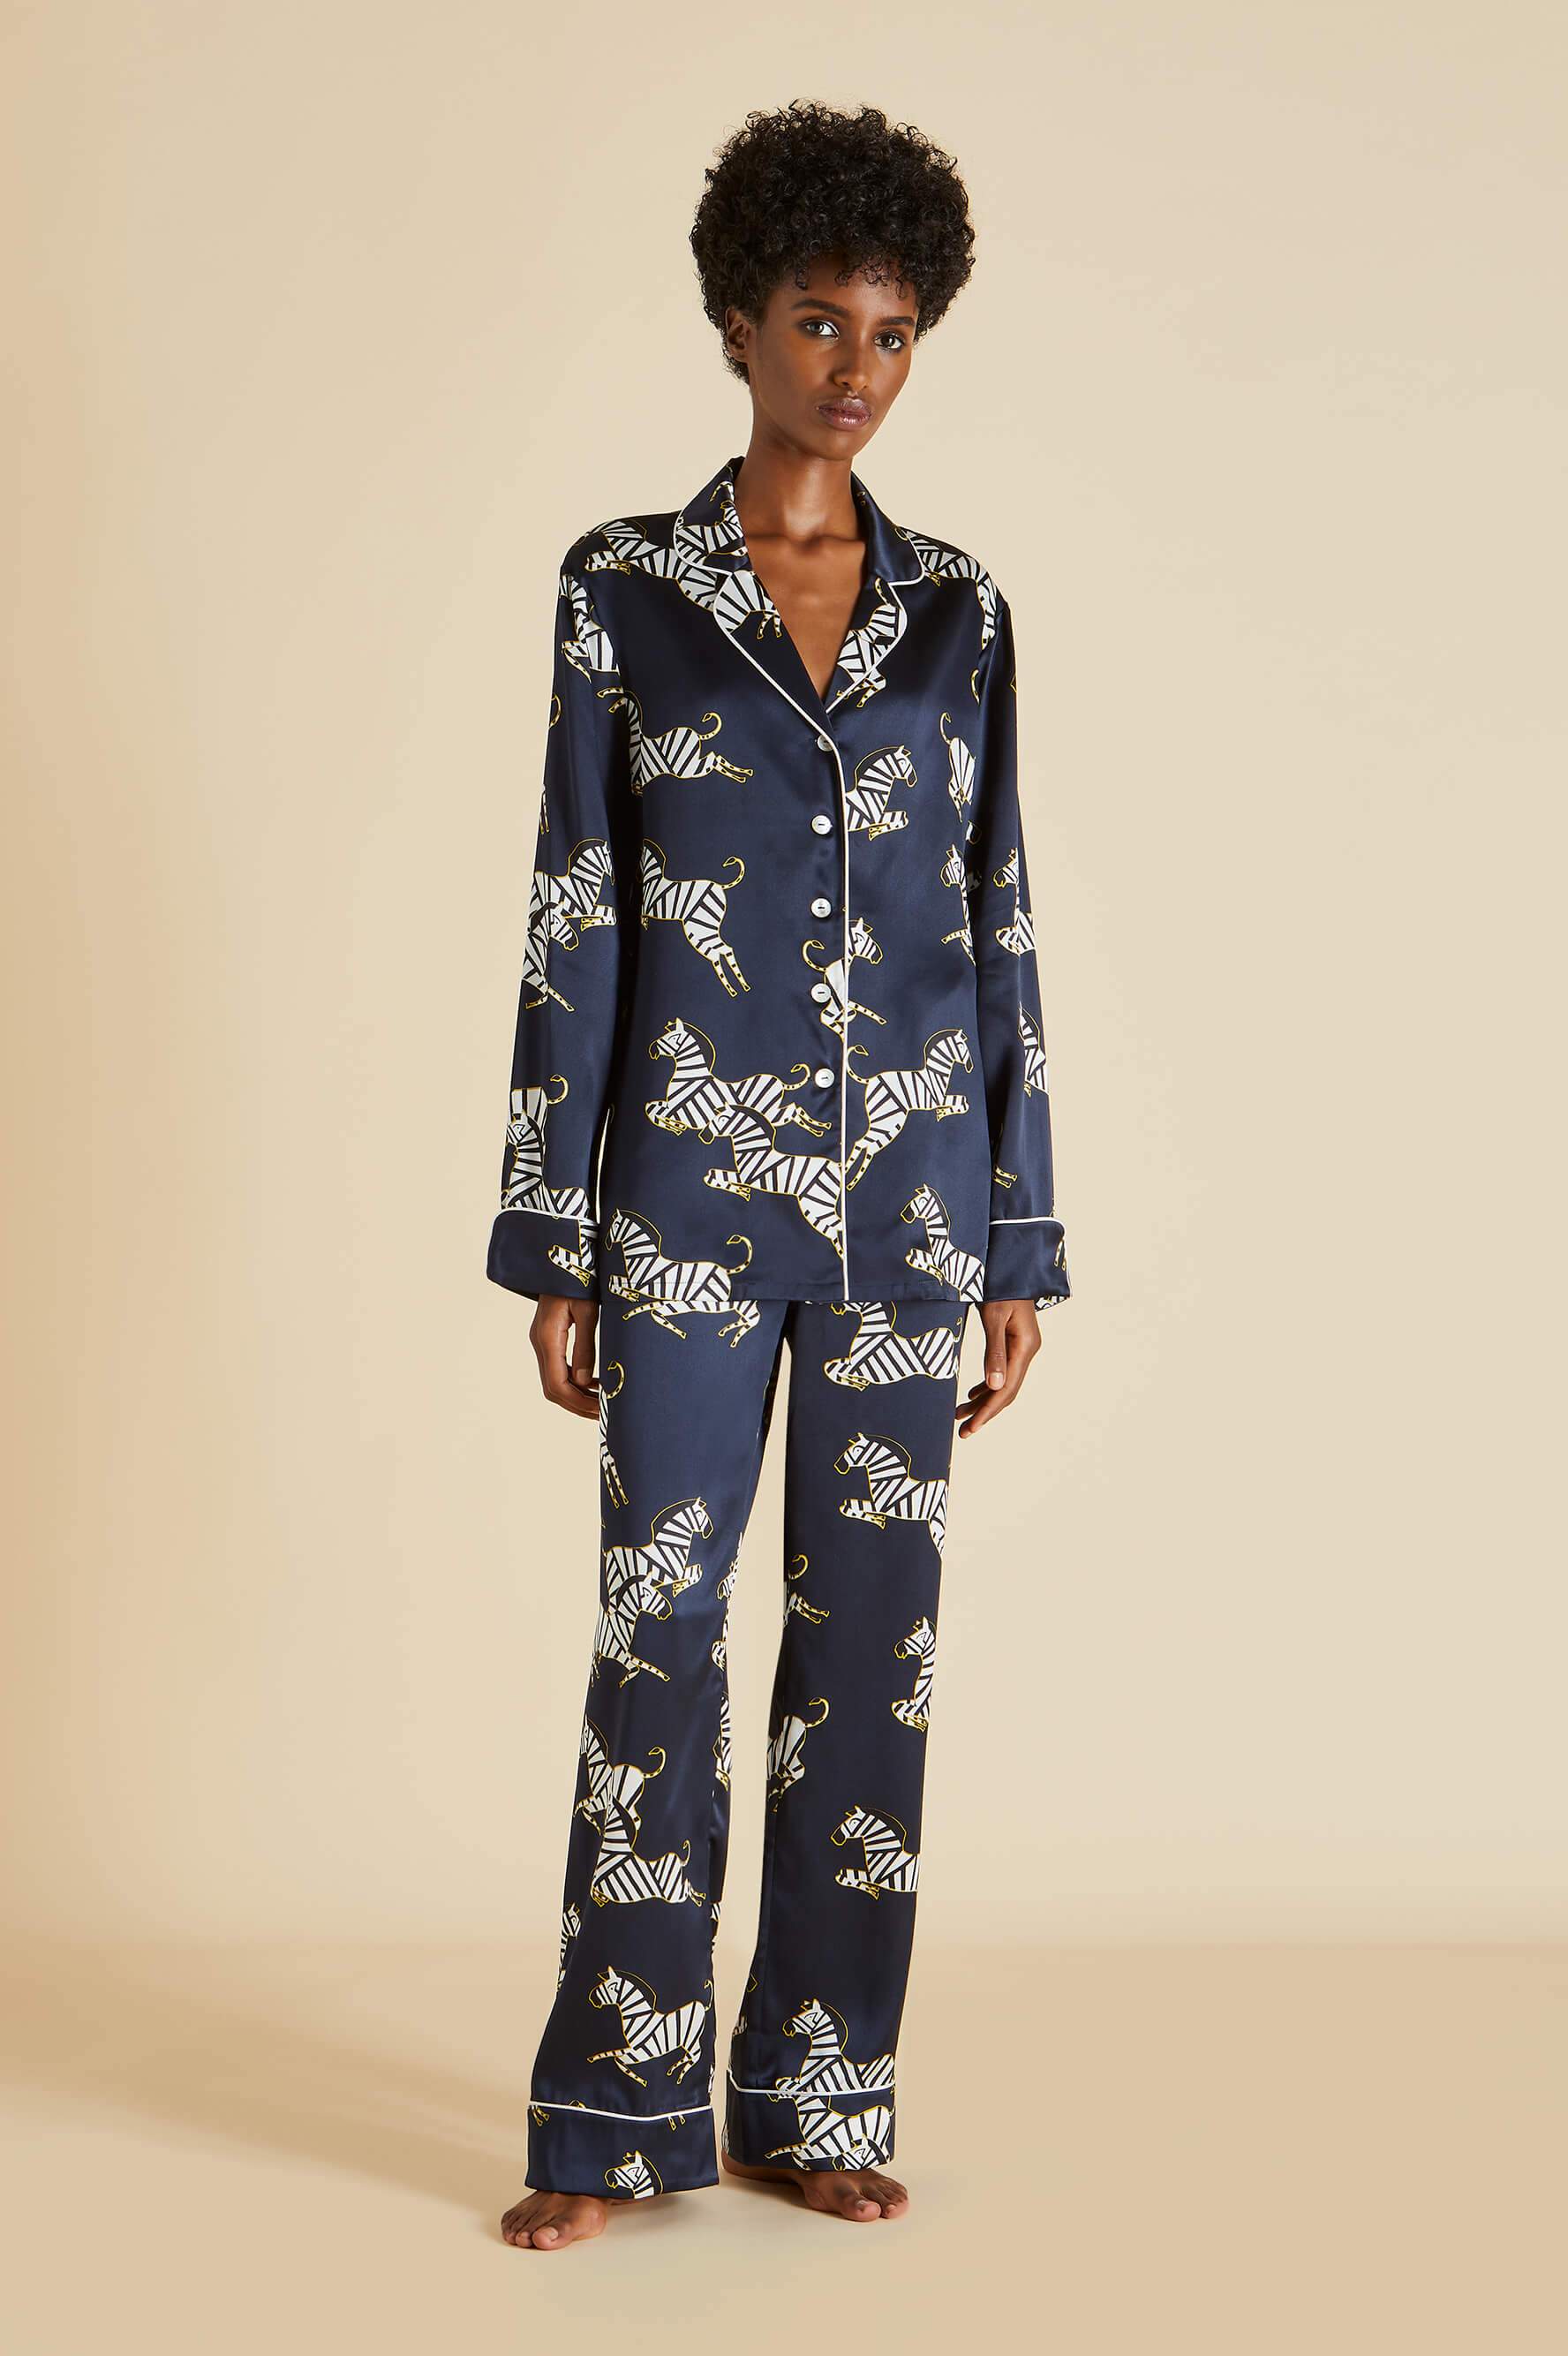 The Lila Zizi  Olivia von Halle Navy Zebra Printed Luxury Silk Pajama Set